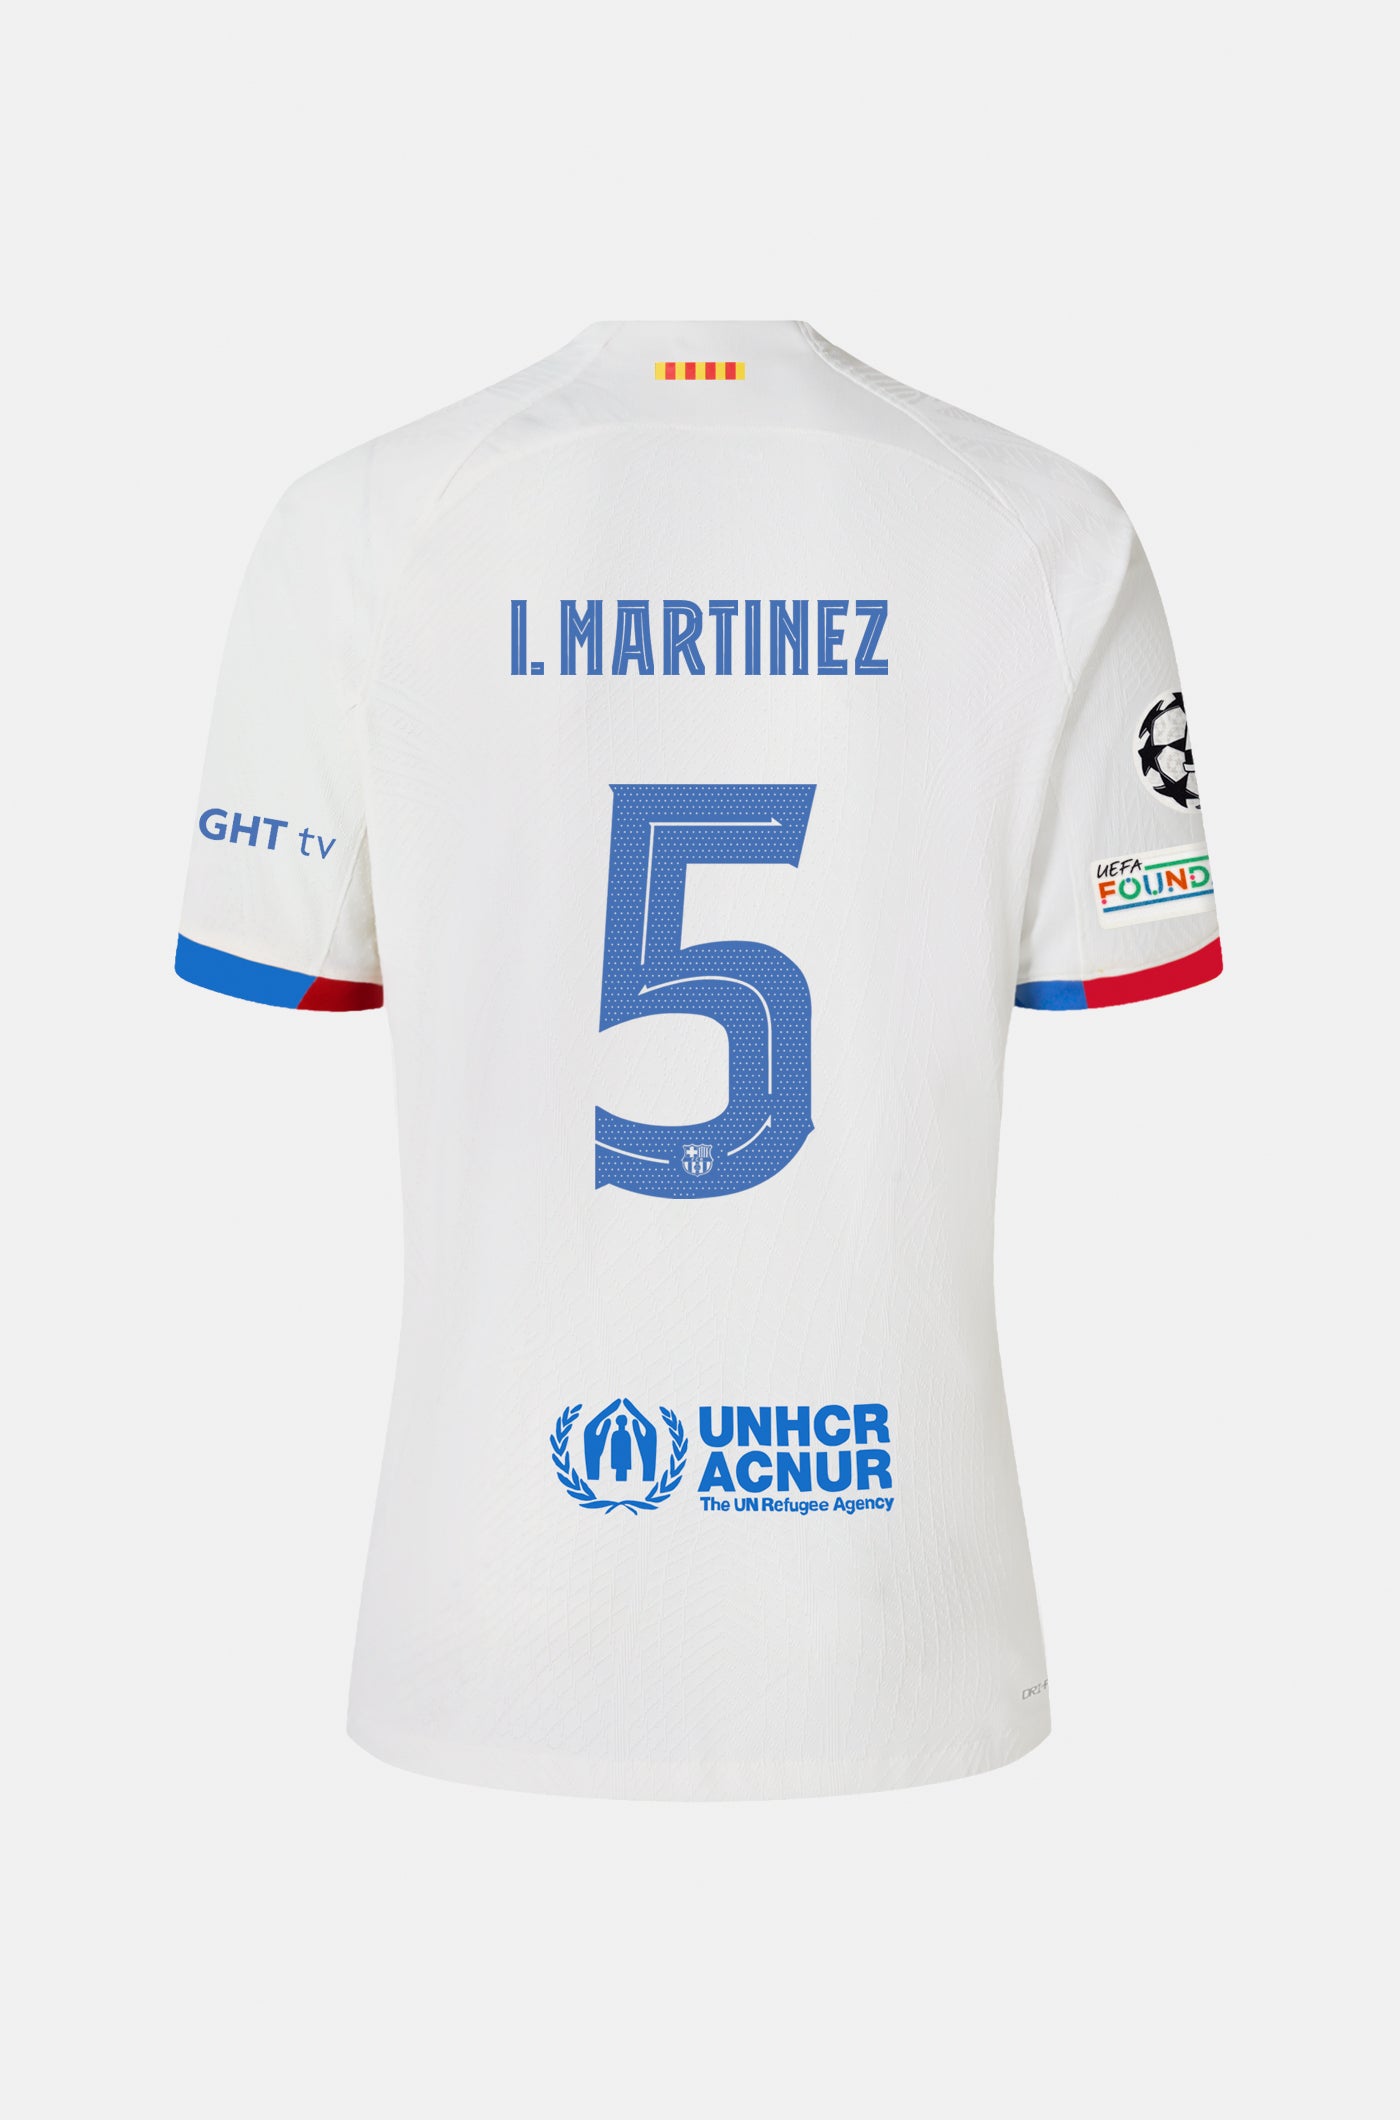 UCL FC Barcelona away shirt 23/24 Player’s Edition - I. MARTÍNEZ